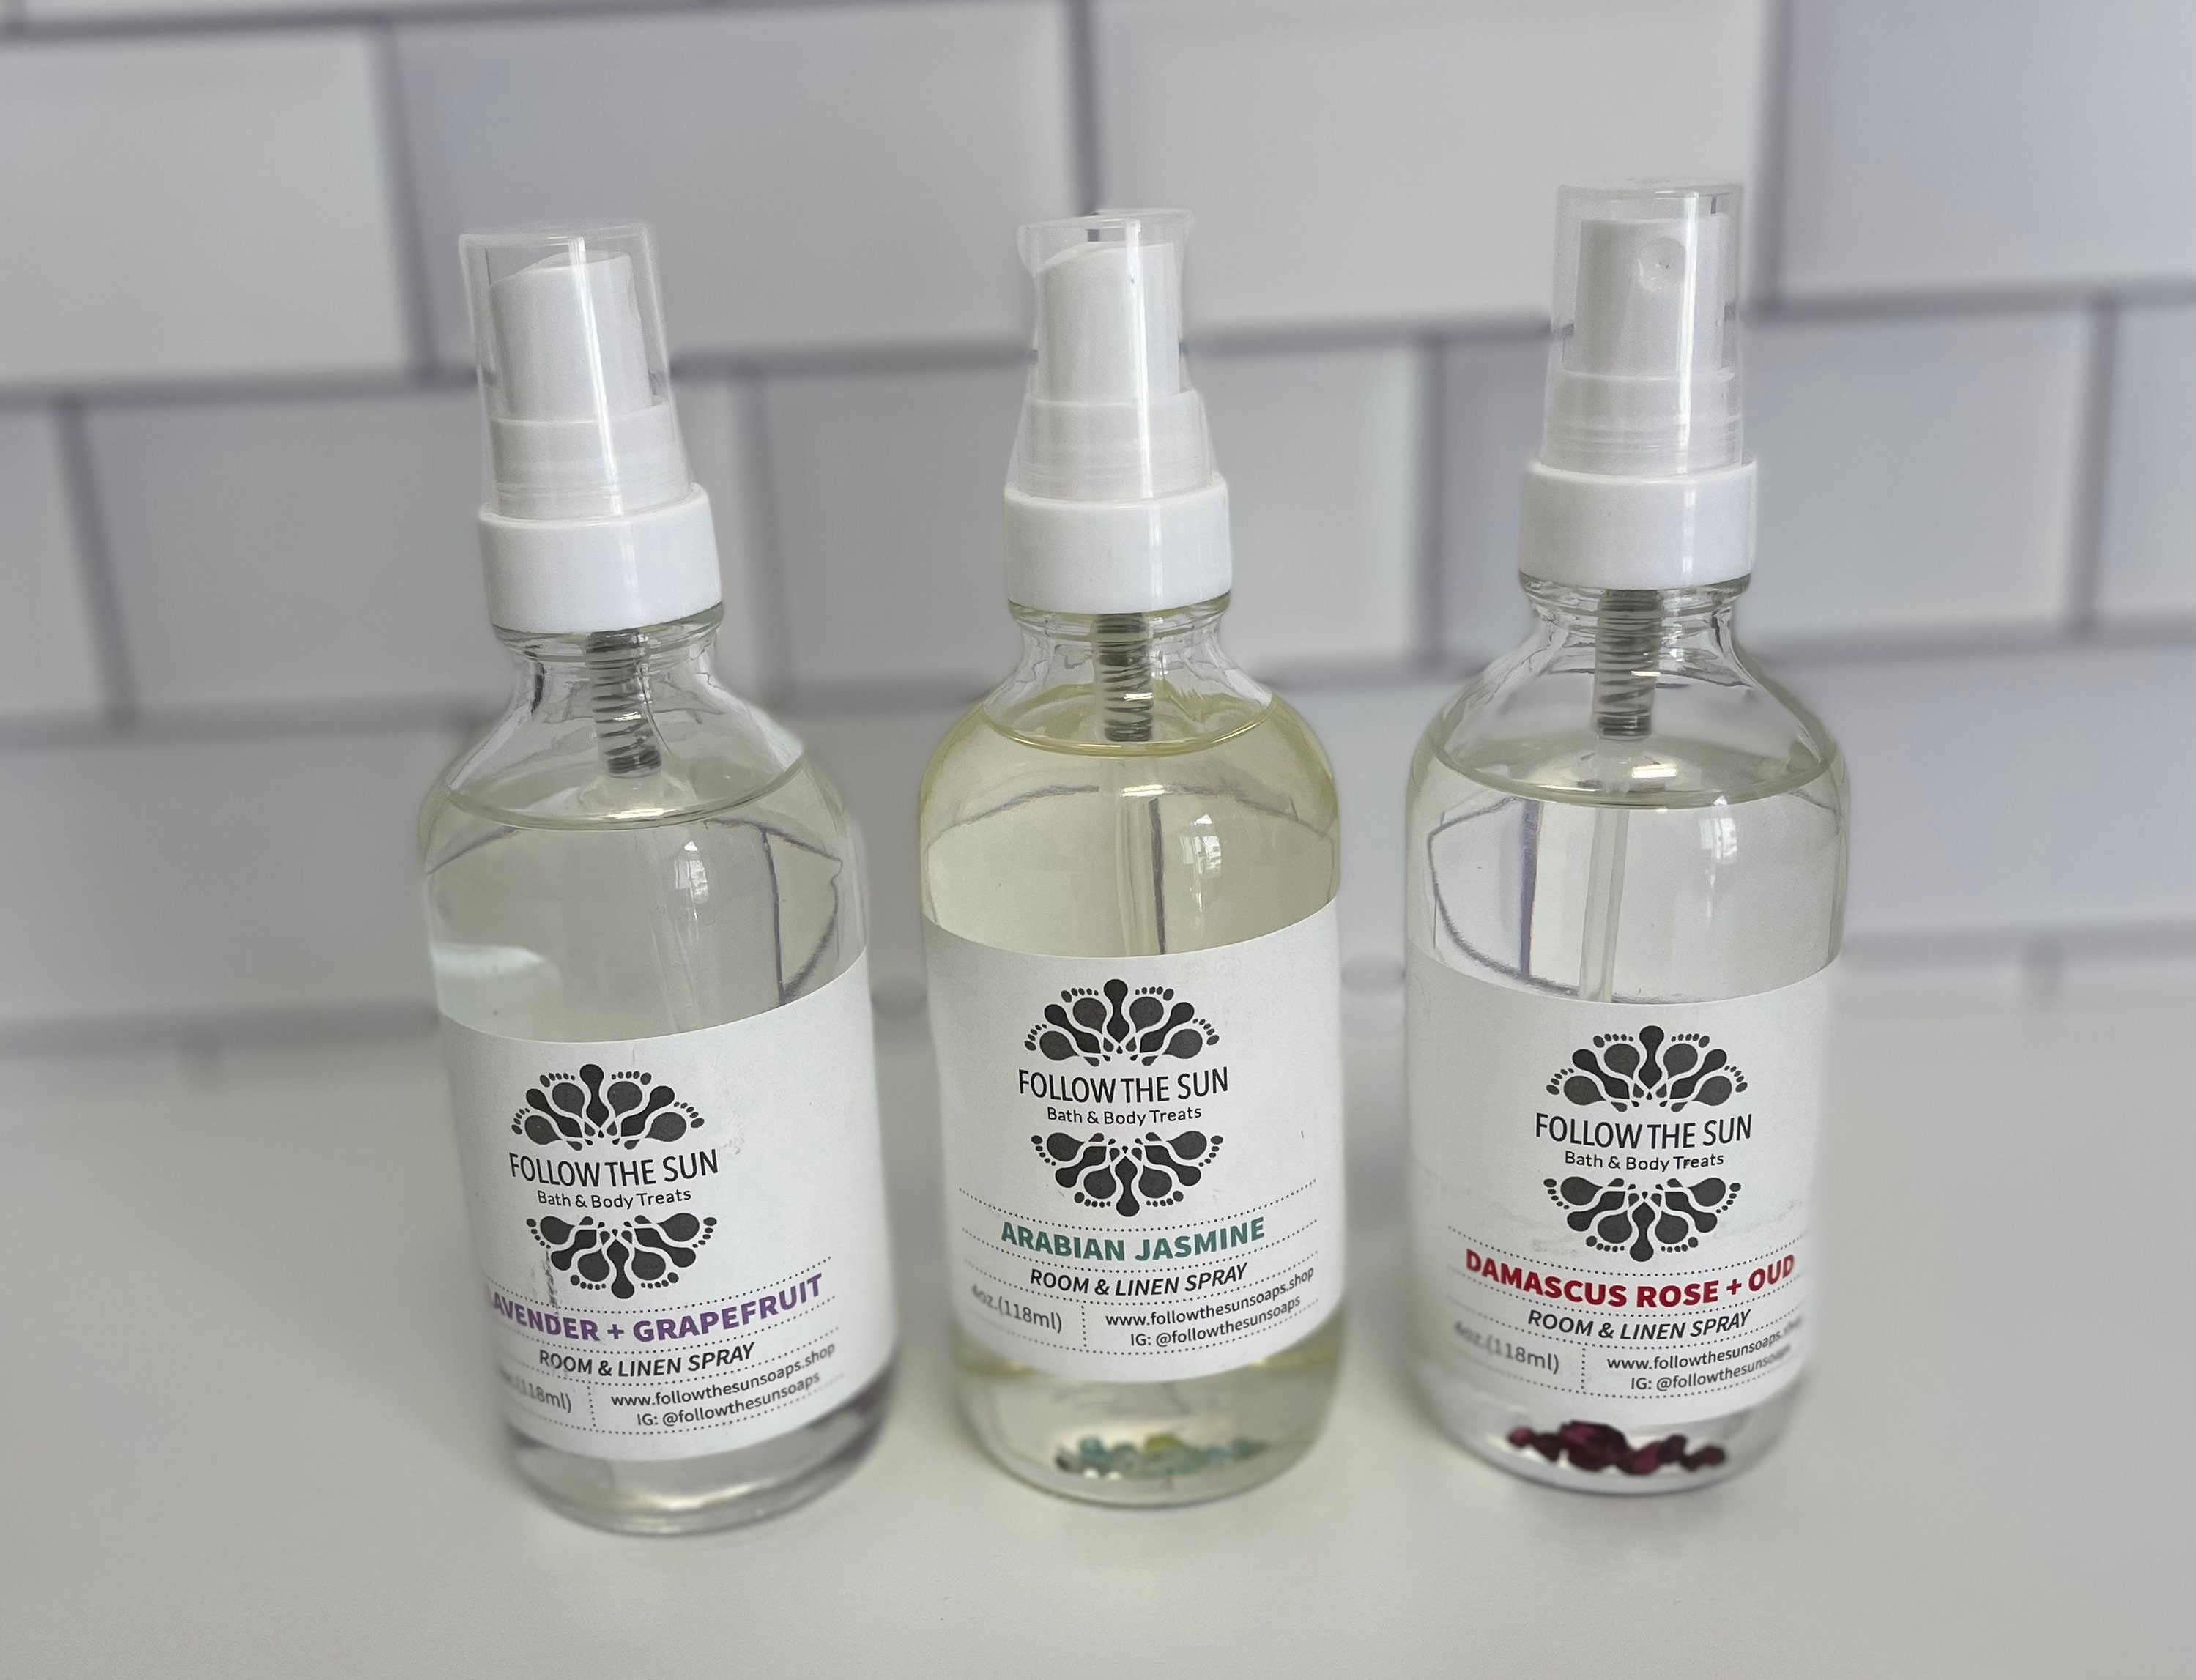 HARMONY Aromatherapy Body Room Spray Mist - Lavender, Spearmint, Orange &  Cedarwood Essential Oils - Organic, Vegan, Non GMO, Cruelty Free